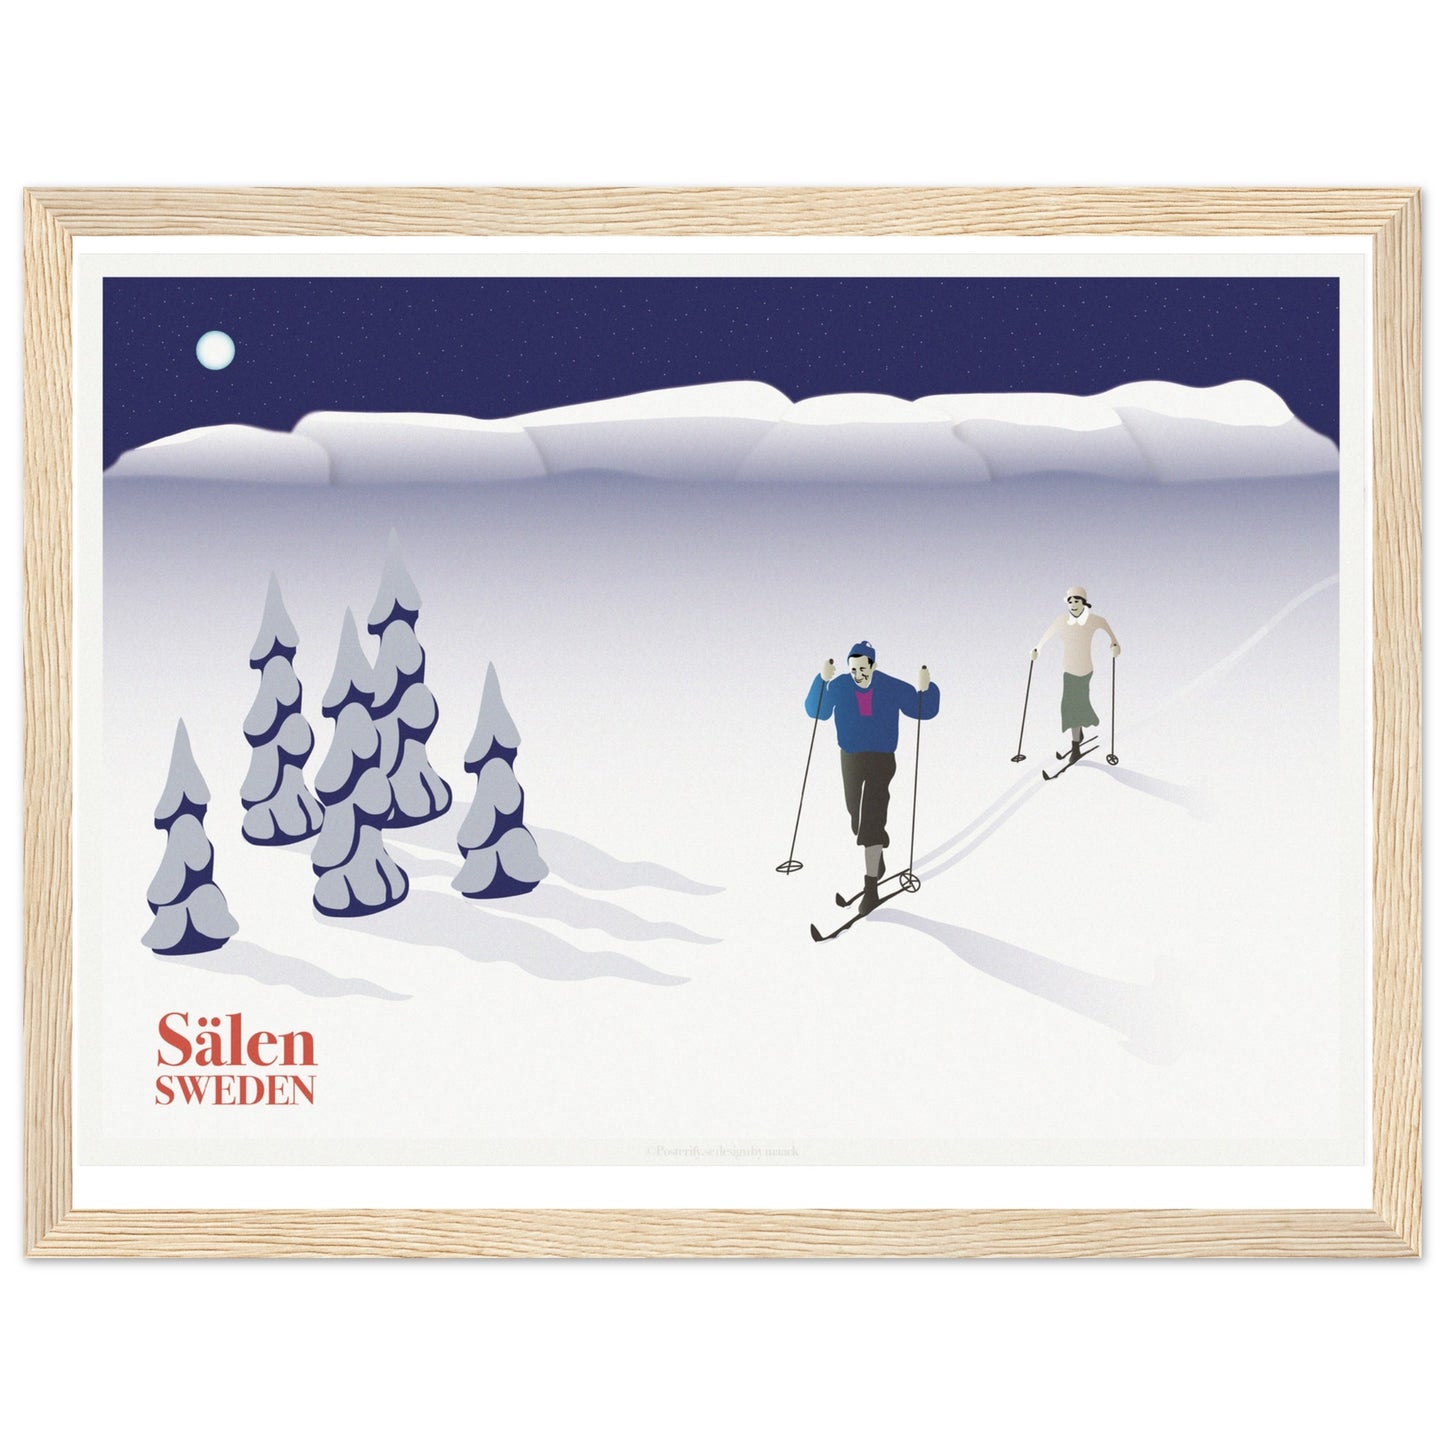 Sälen, Sweden, by Posterify design, Premium Matte Paper Poster - Posterify